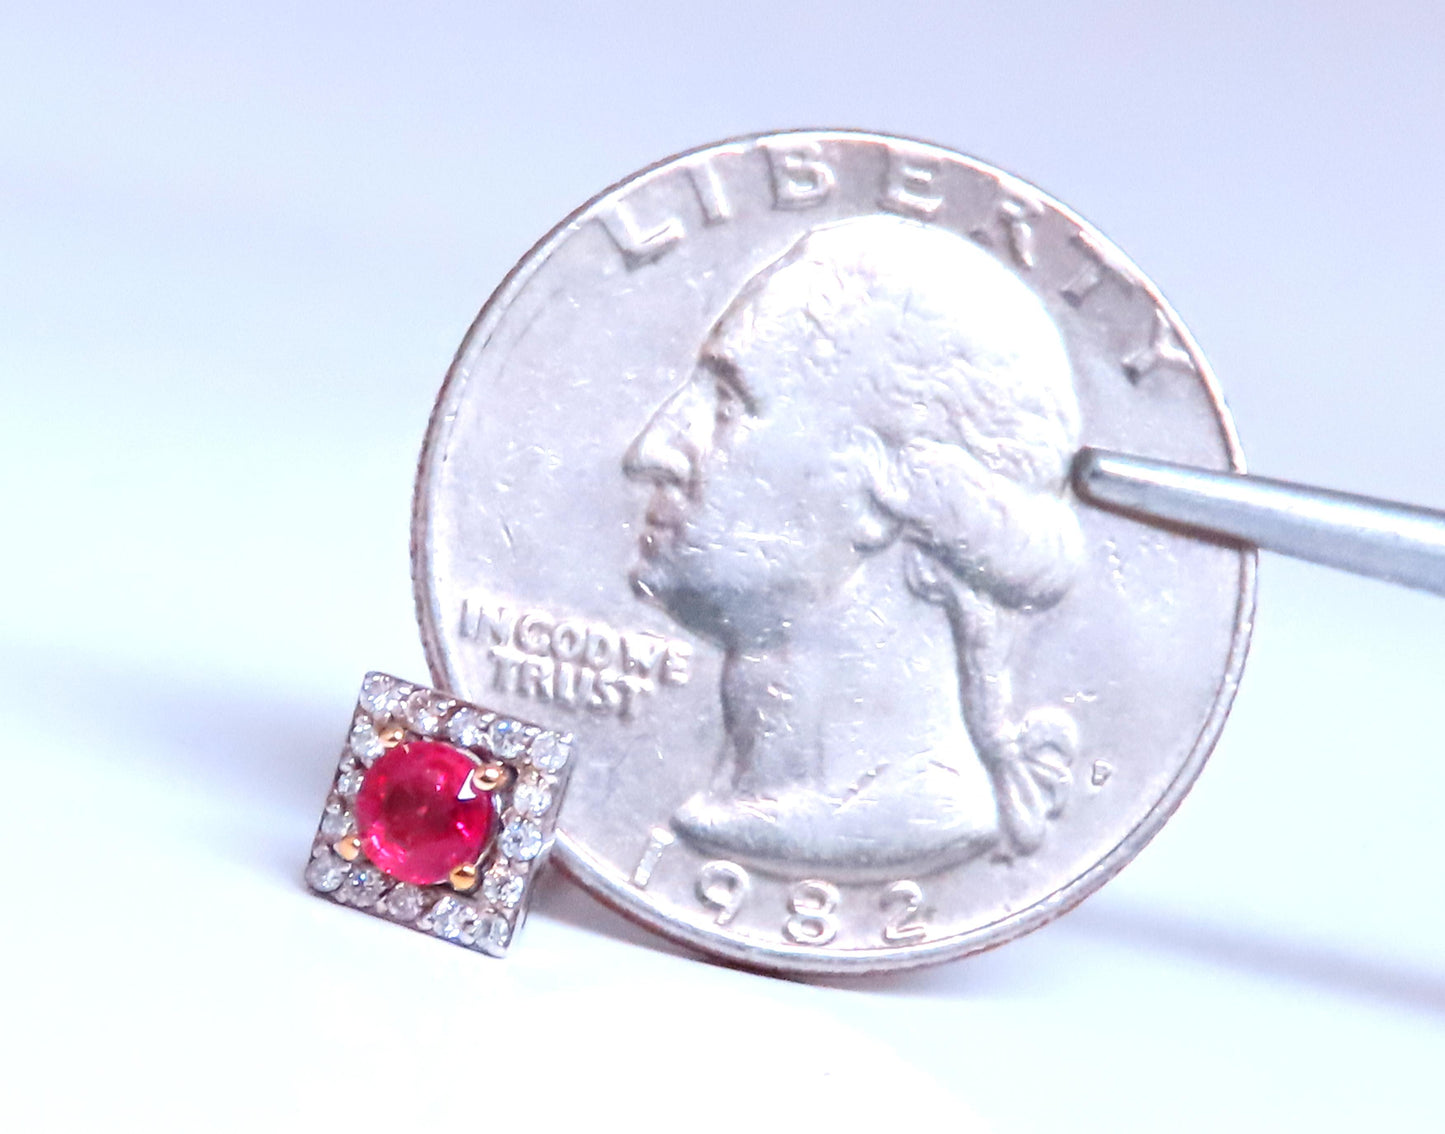 Petite Natural Ruby Diamond Cluster Stud Earrings 14kt Gold 12379